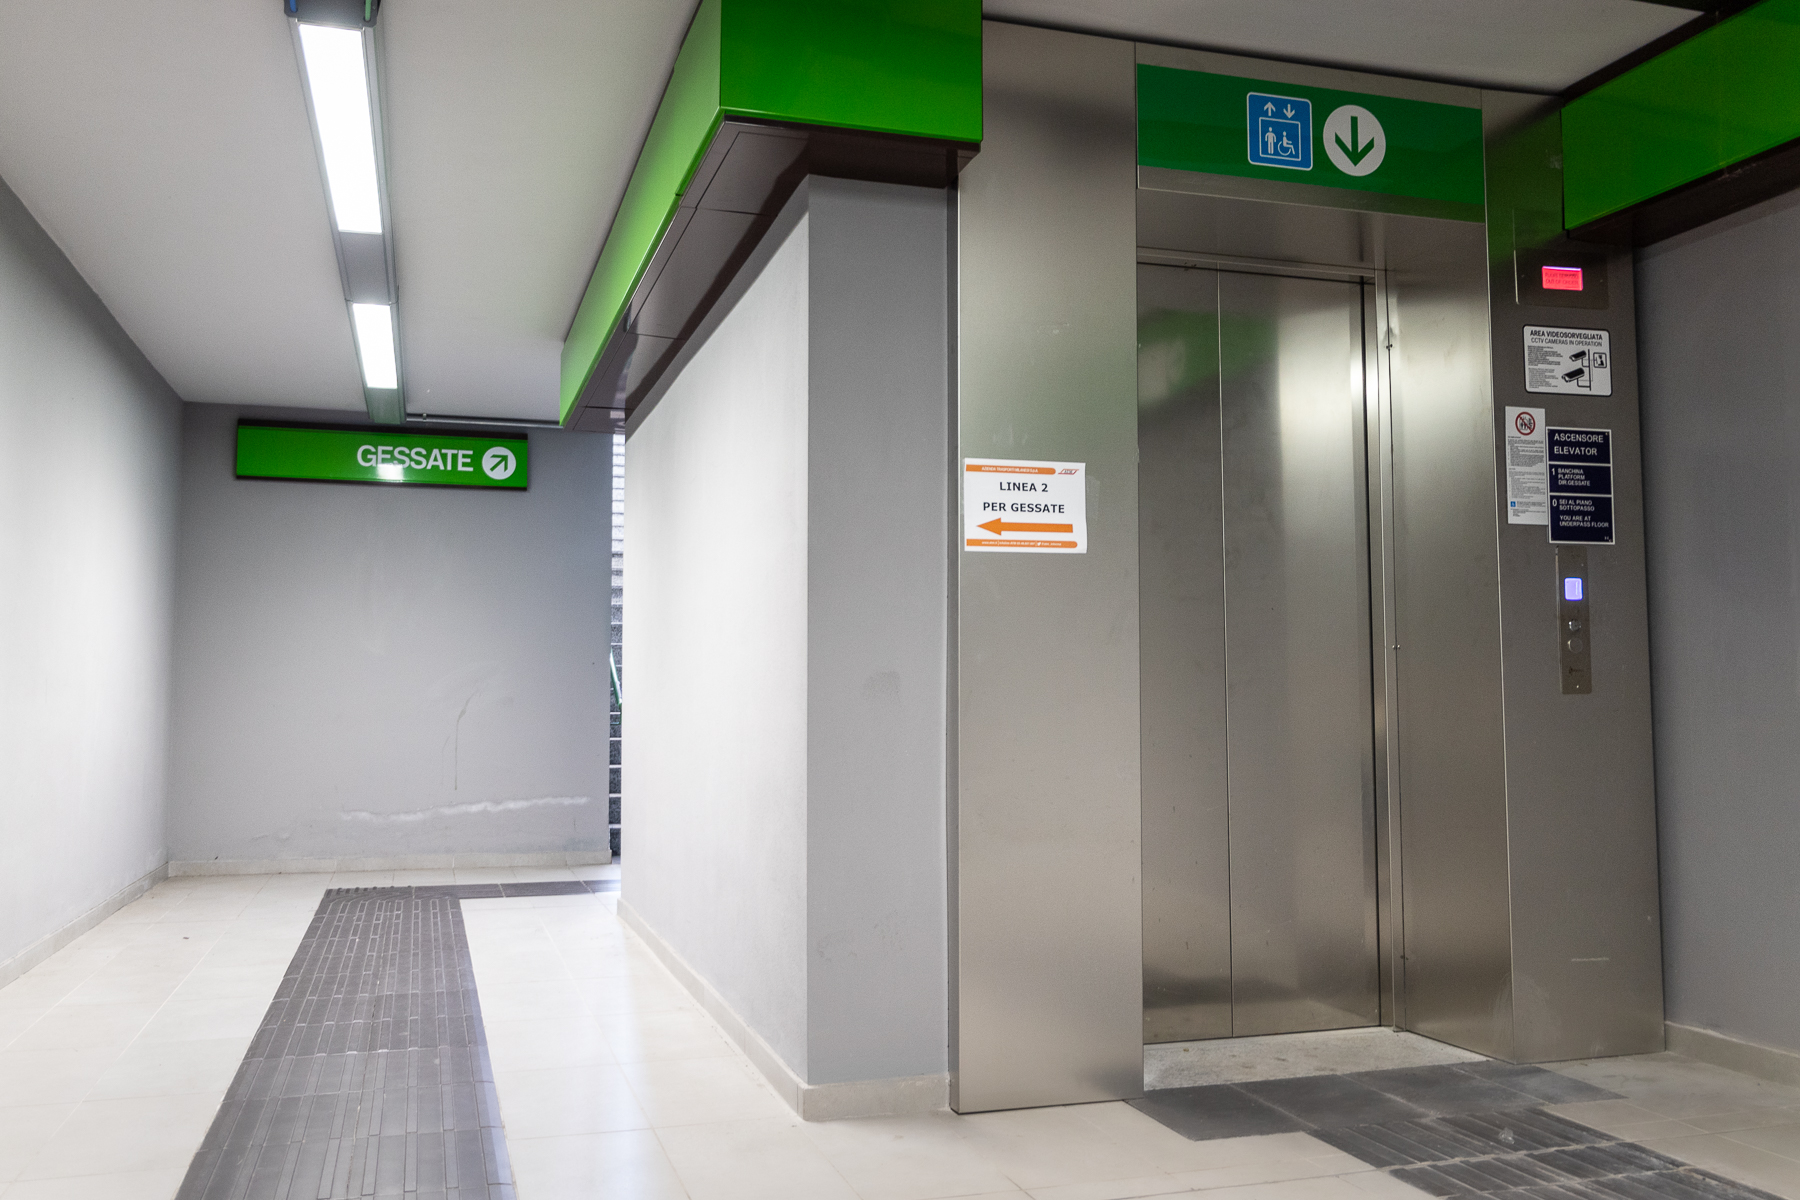 Atm apertura ascensori M2 Bussero (2)